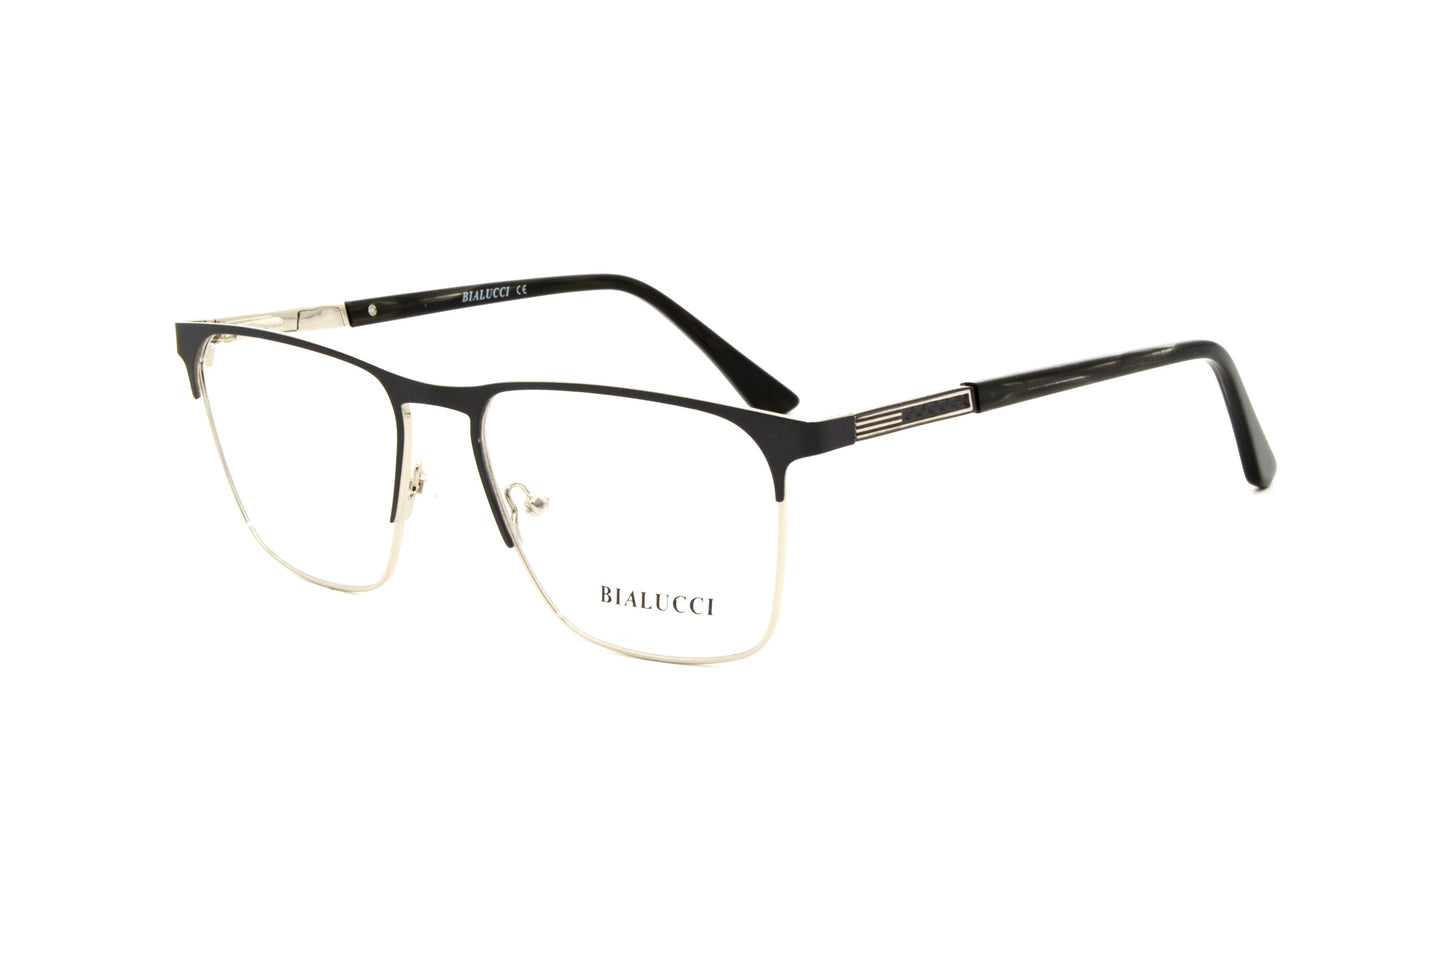 Bialucci eyewear XC 61157 C3